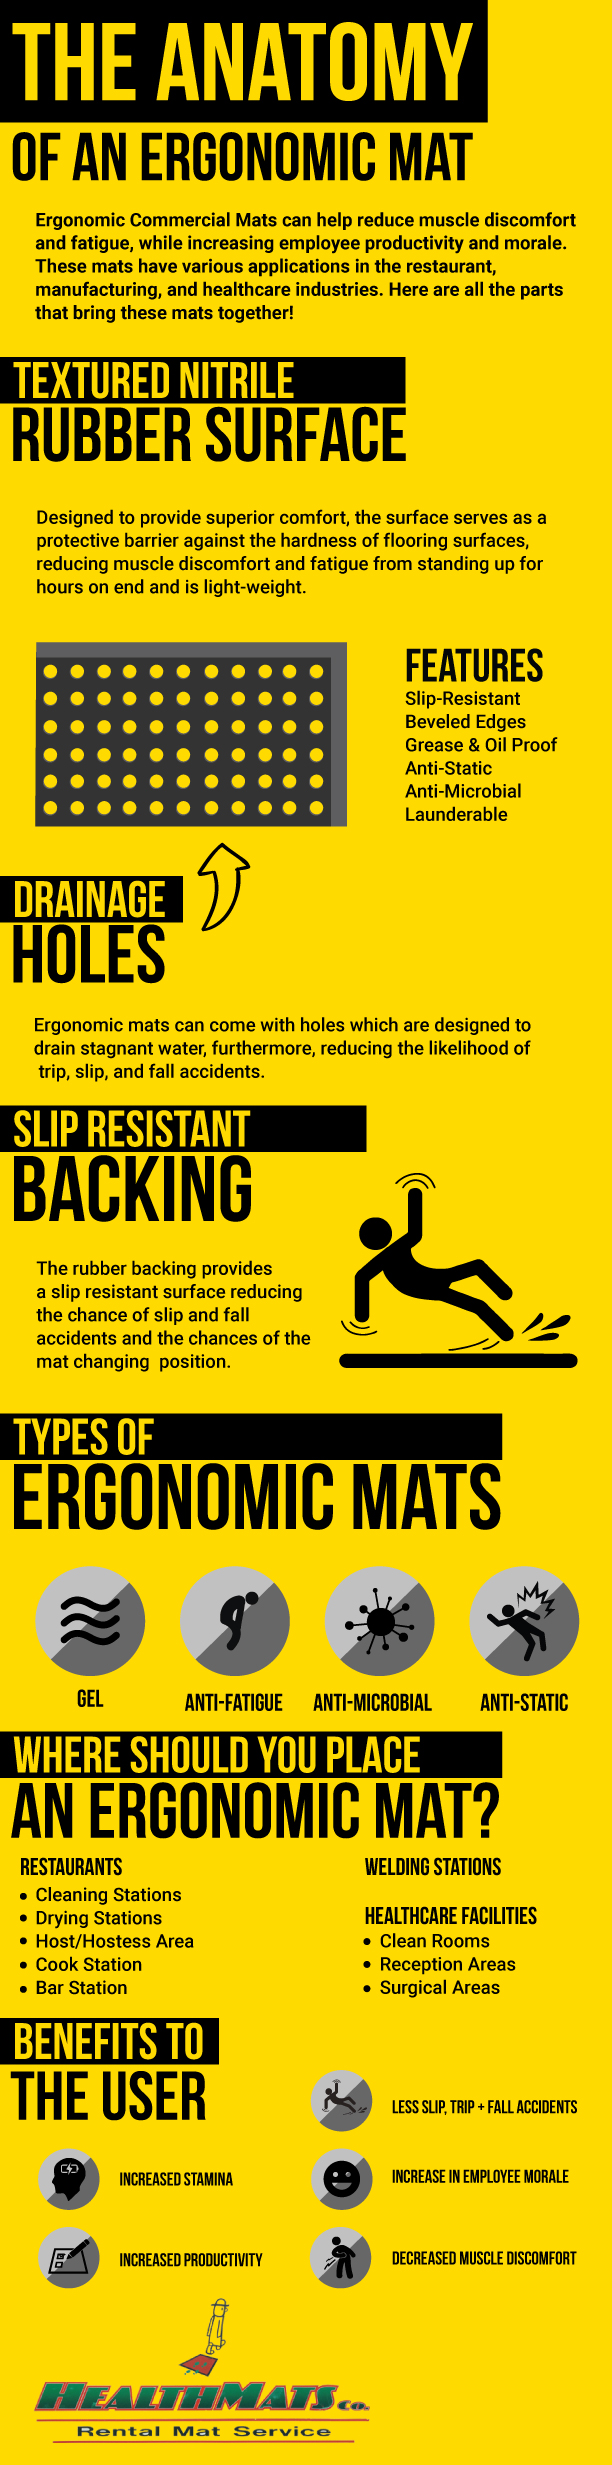 Anatomy of An Ergonomic Mat